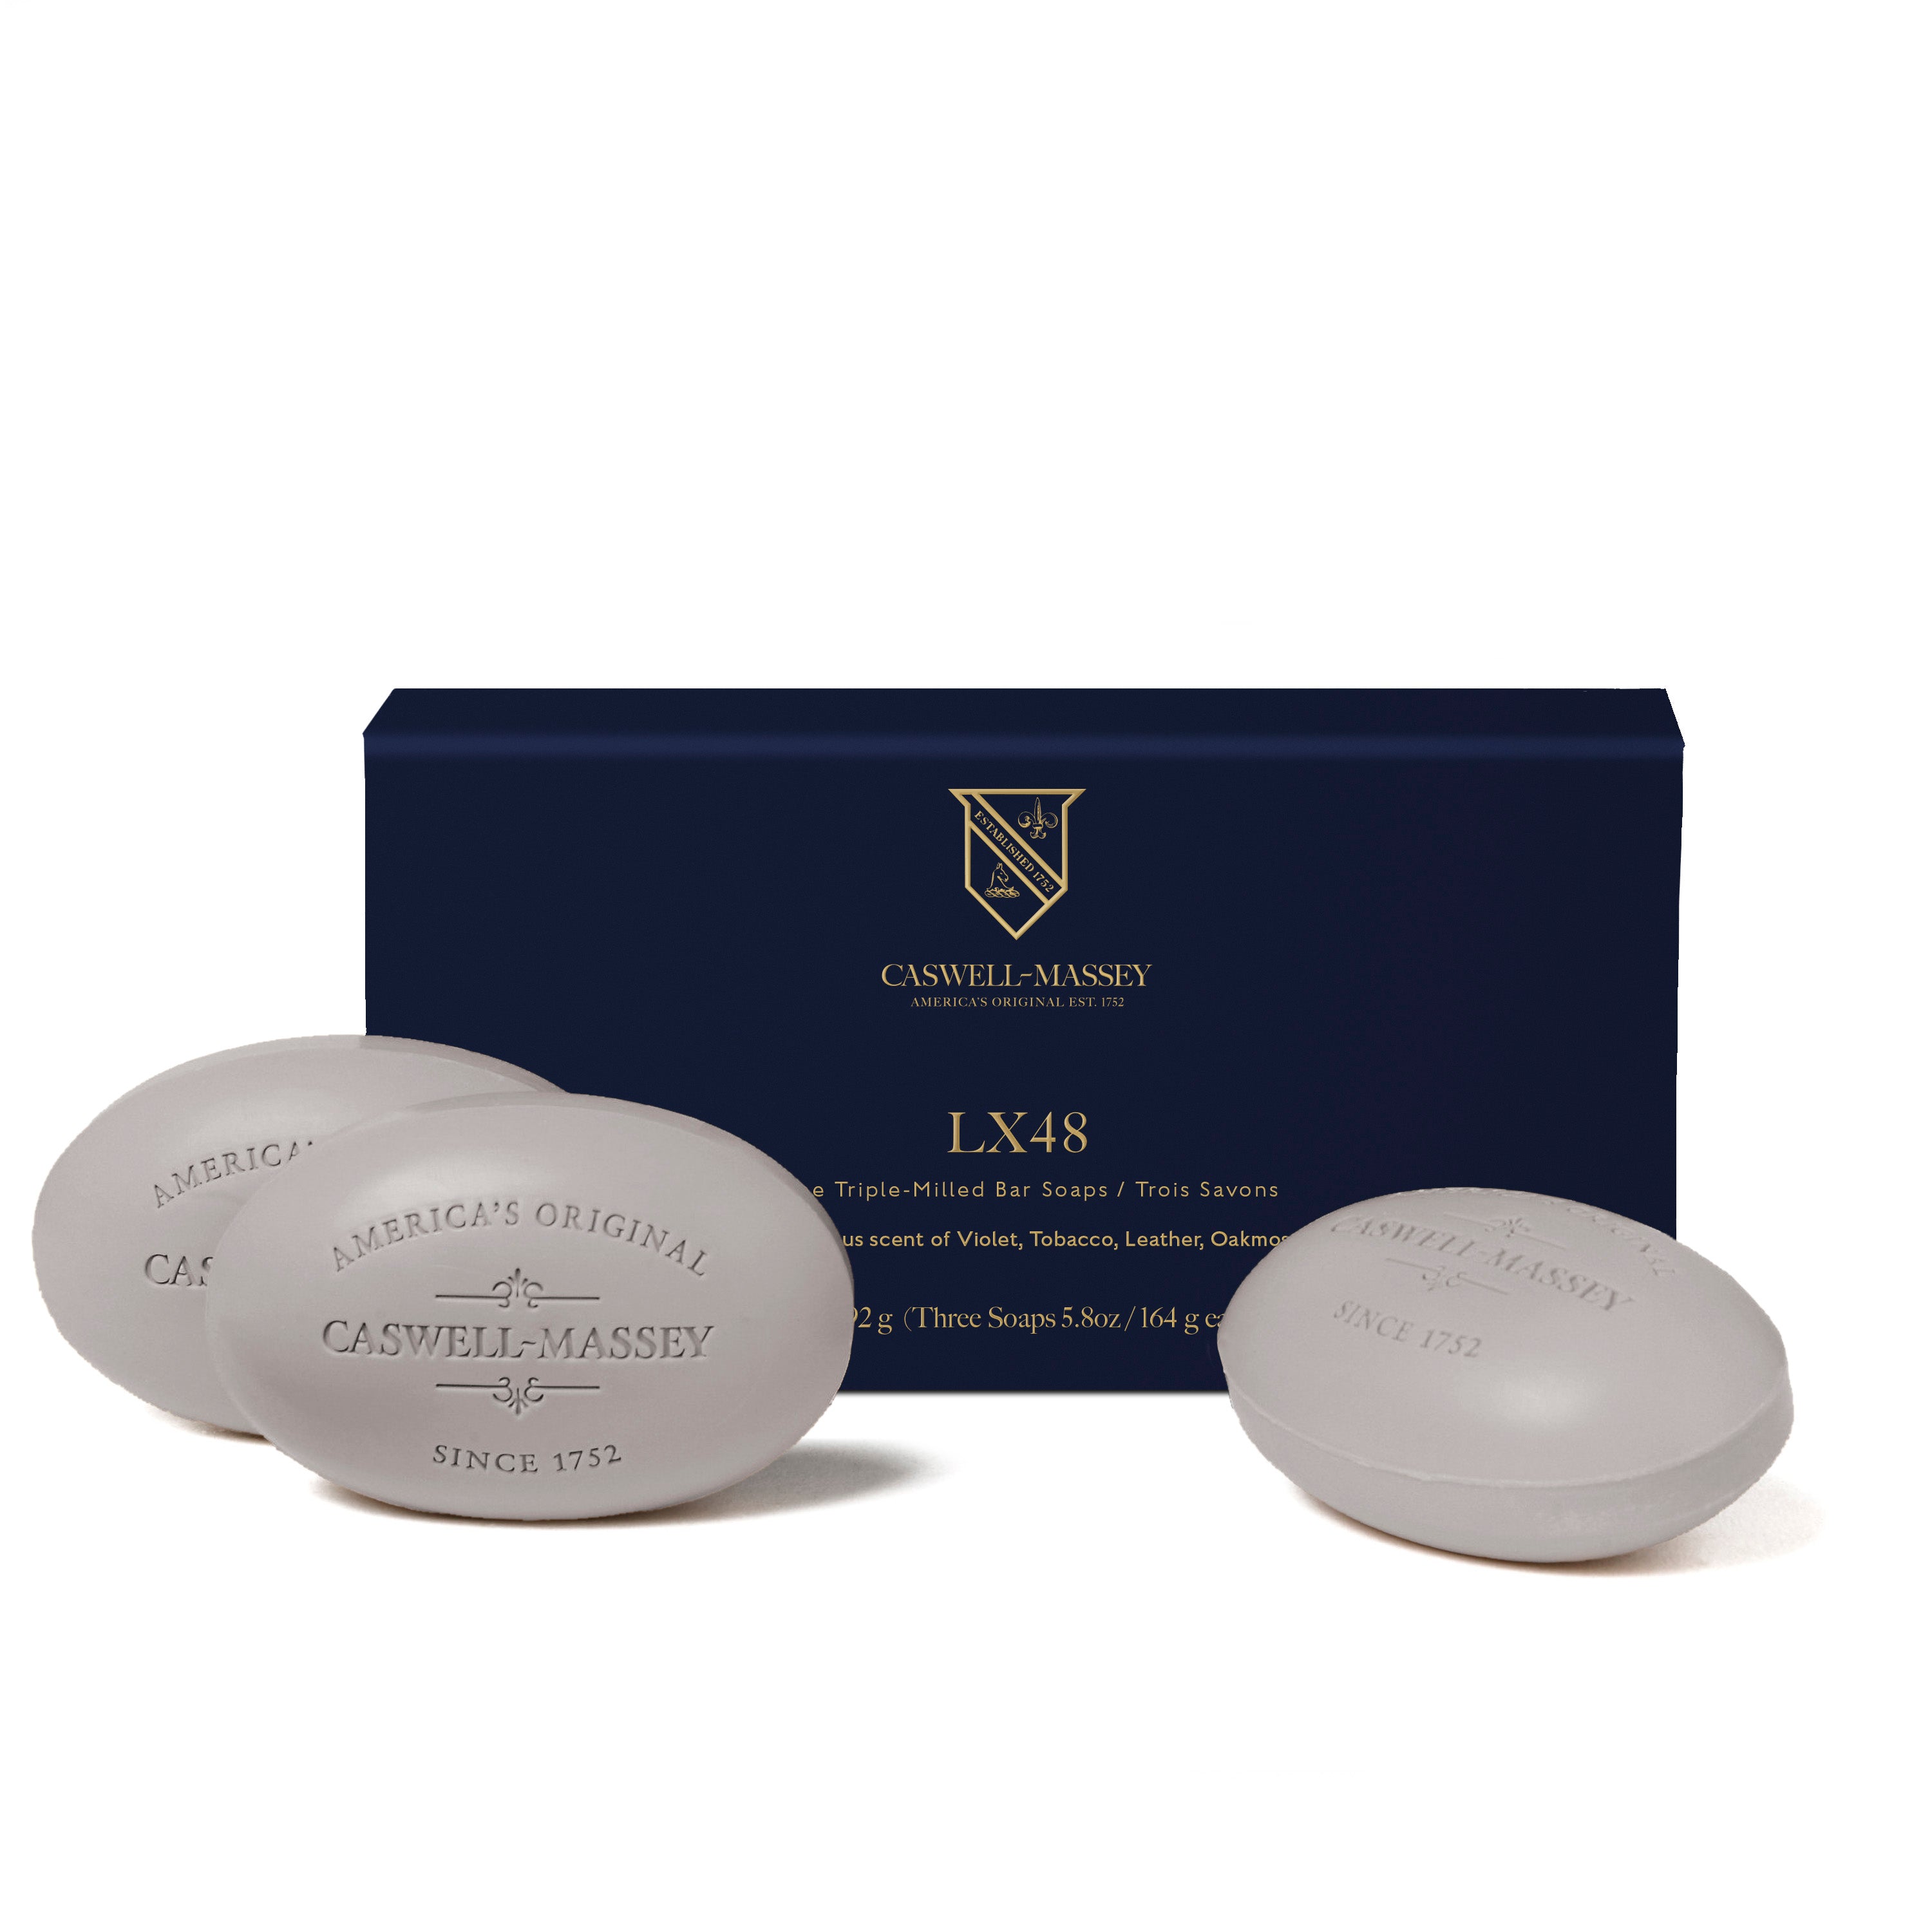 Caswell-Massey LX48 Luxury Bar Soap for Men 3-Soap Gift Set